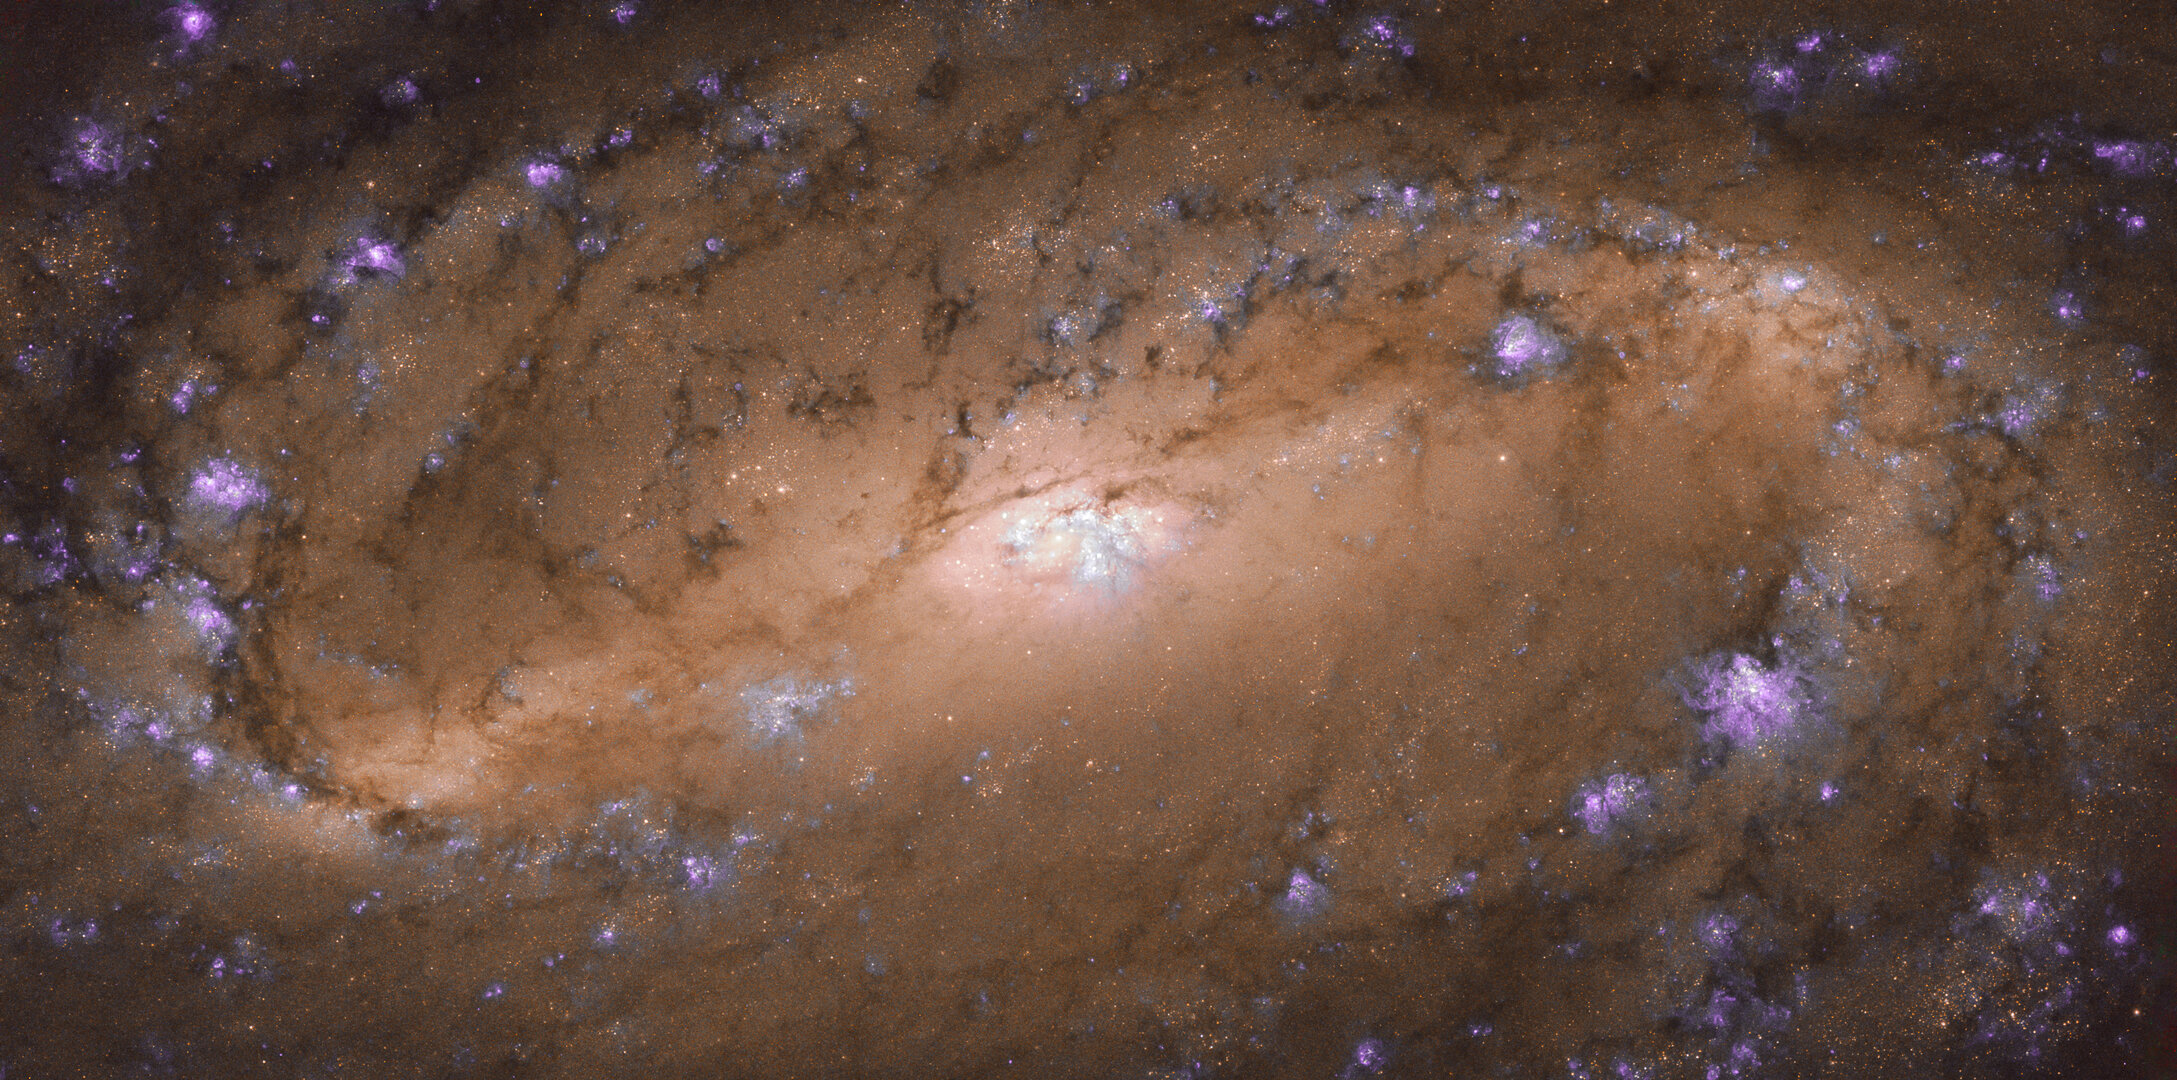 Spiral galaxy NGC 2903